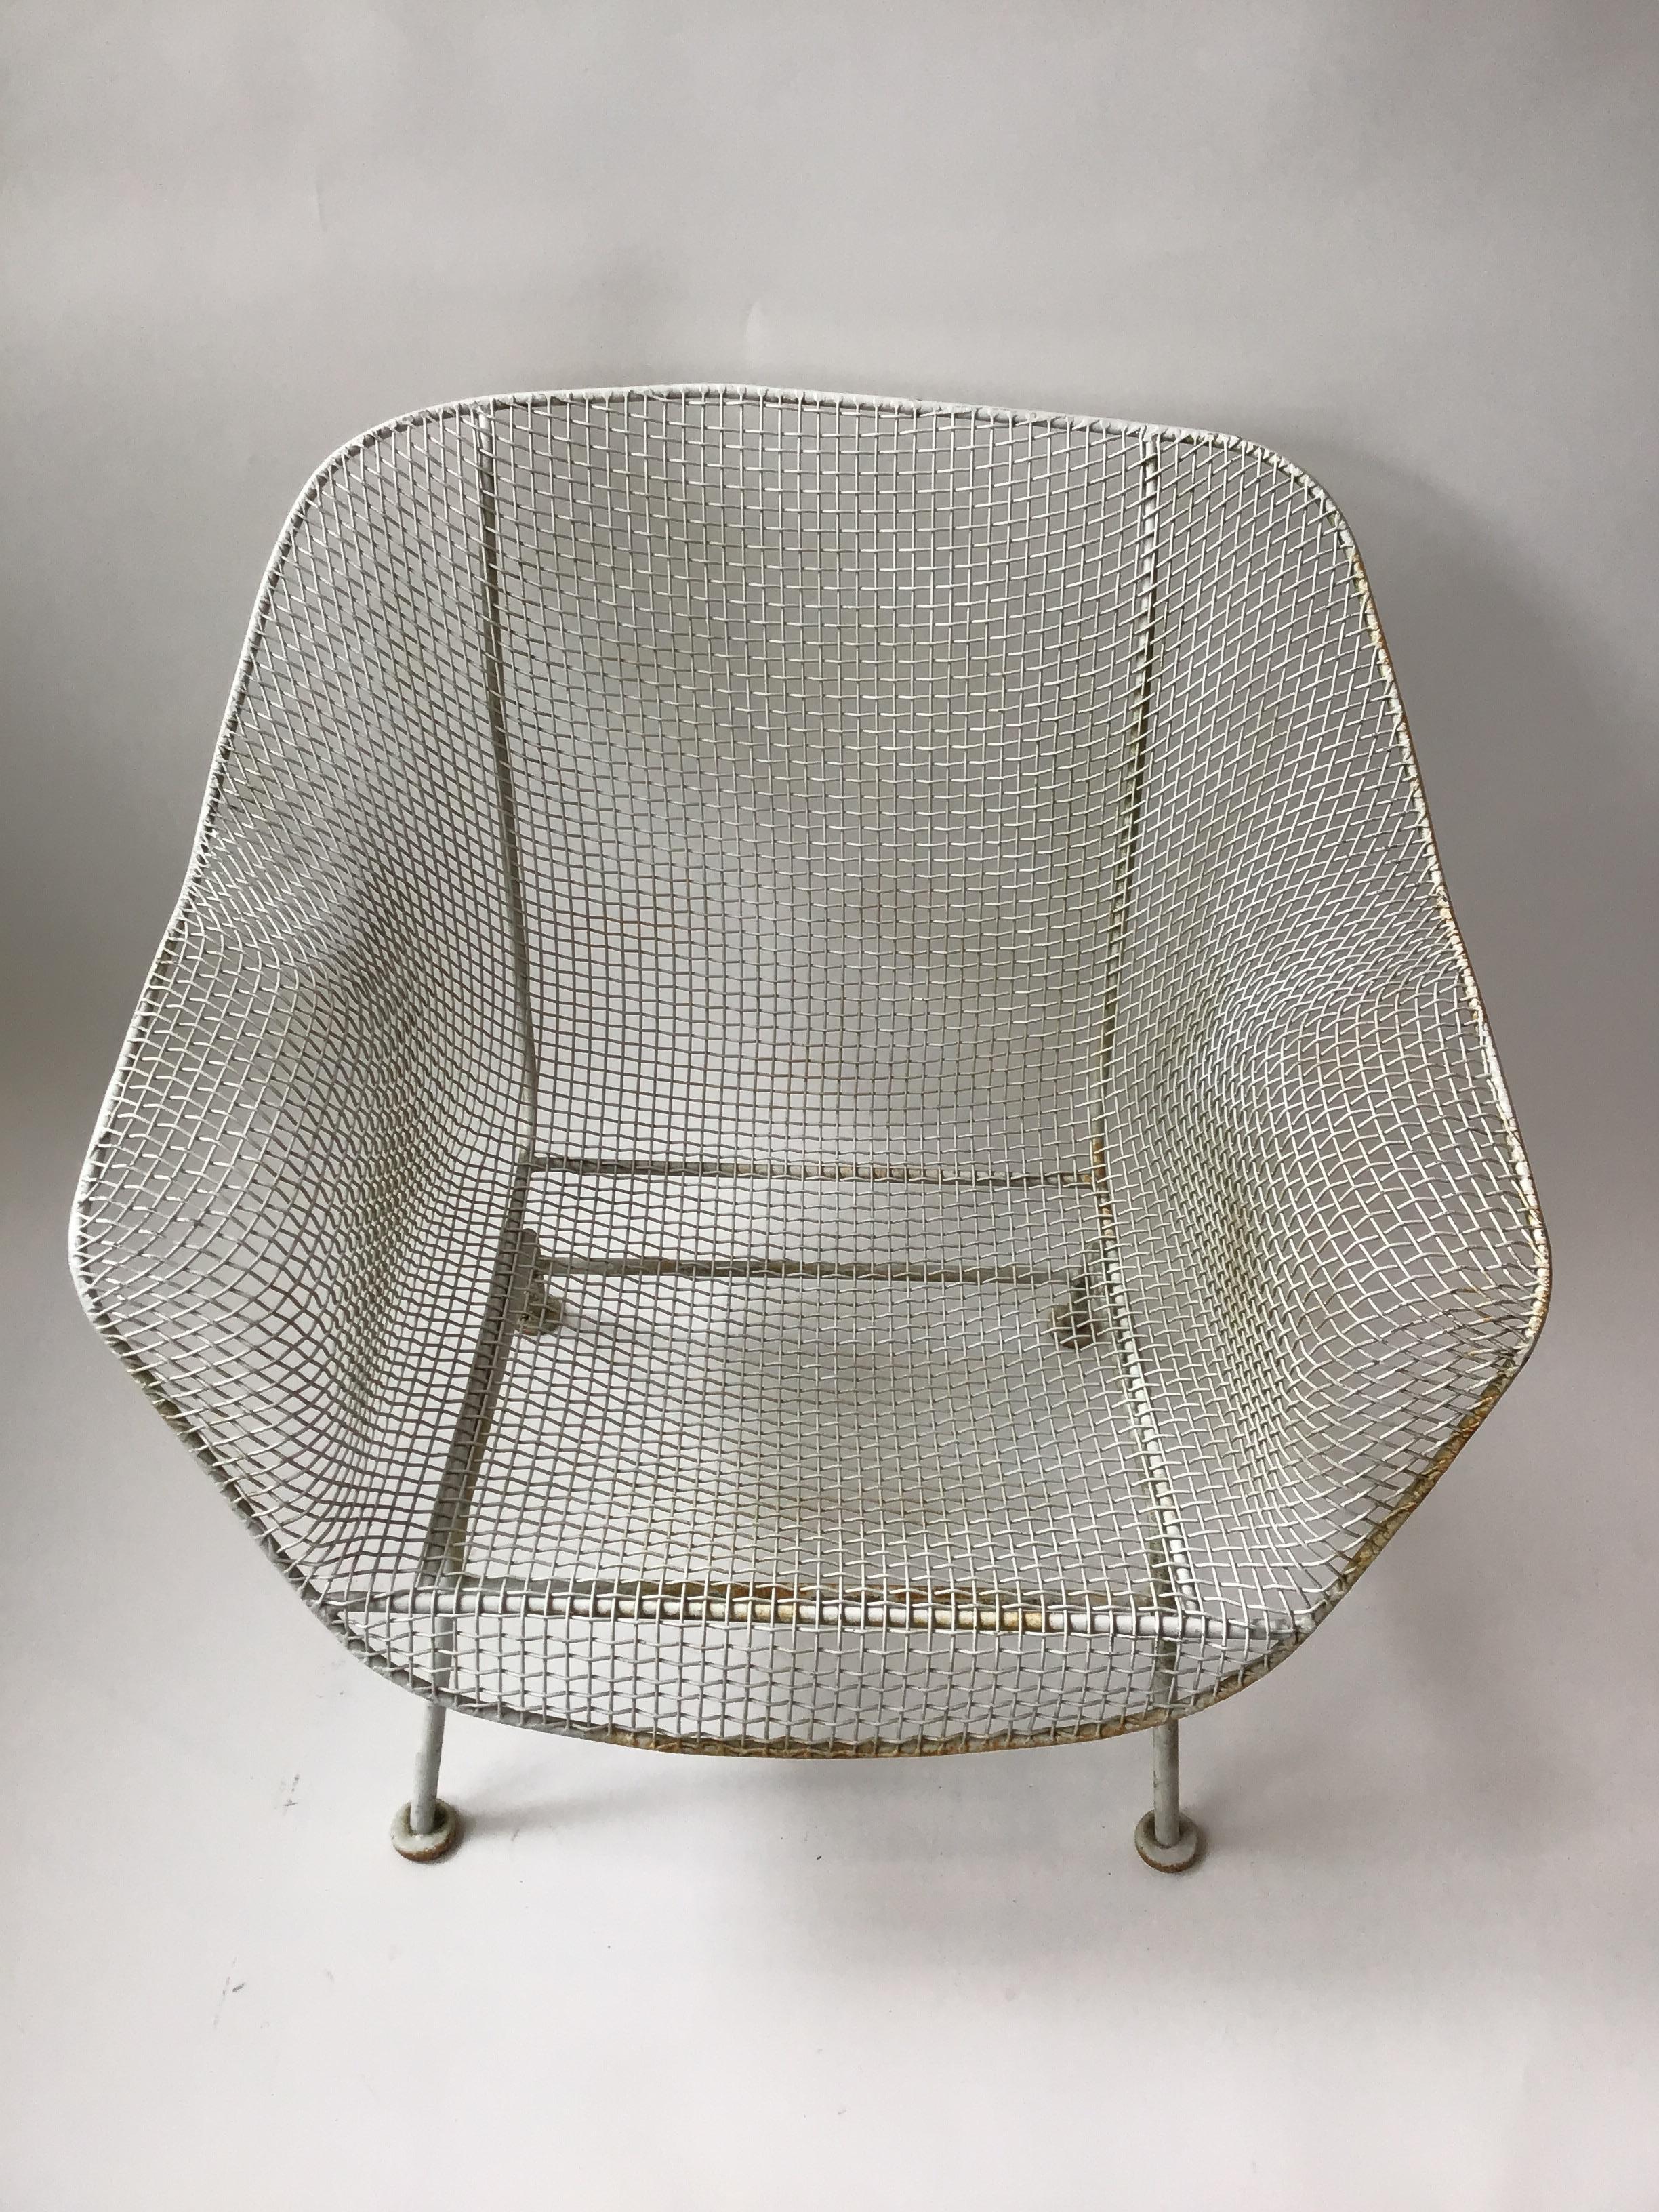 1950s woodard sculptura iron mesh lounge chair. Out of a Southampton, N.Y. Estate.